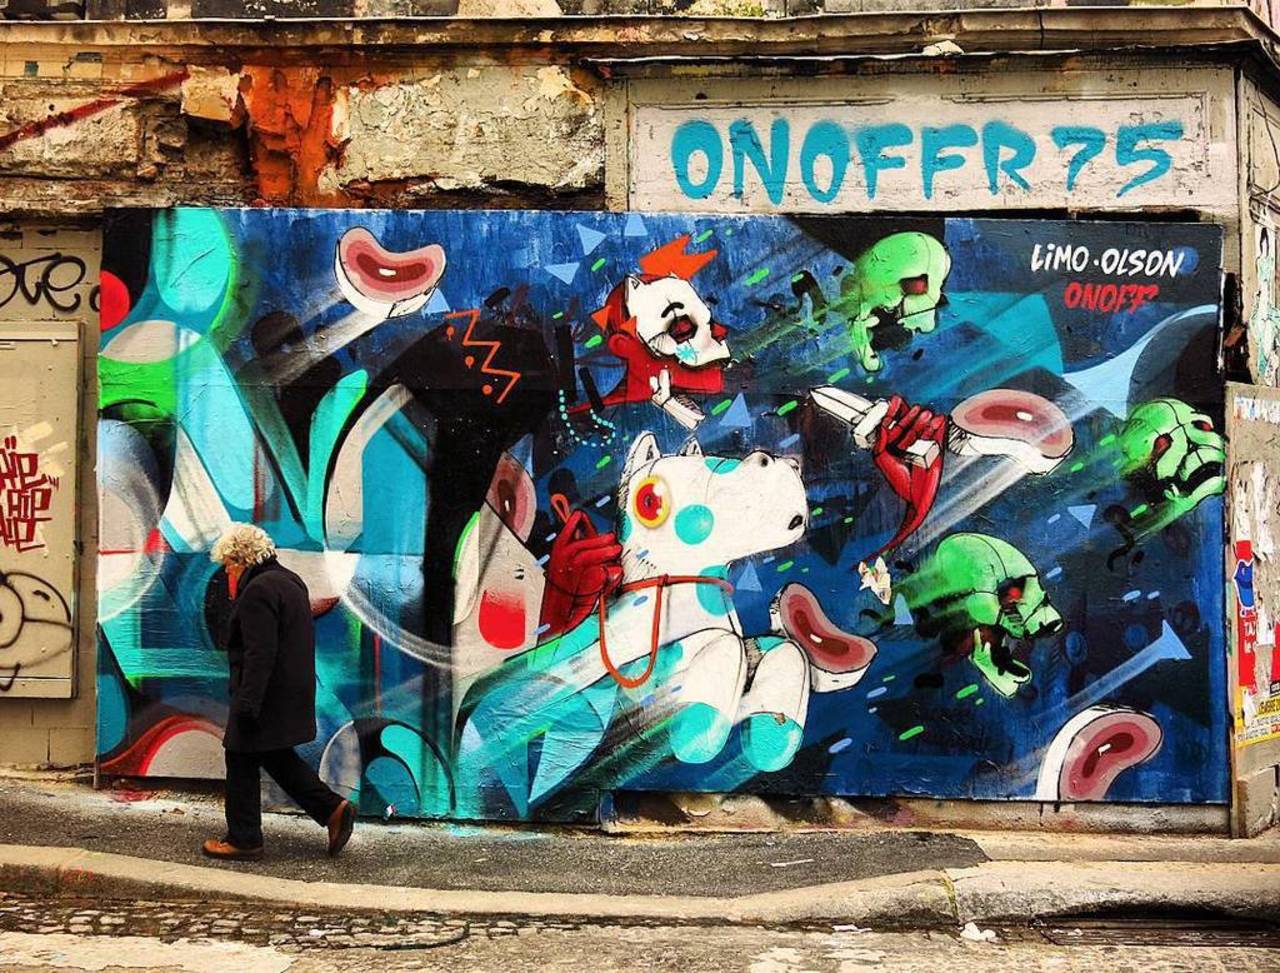 #streetart #streetartparis #urbanart #urban #paris #graffiti #onoffr75 by omerlin https://t.co/7ZzvA4zd3P